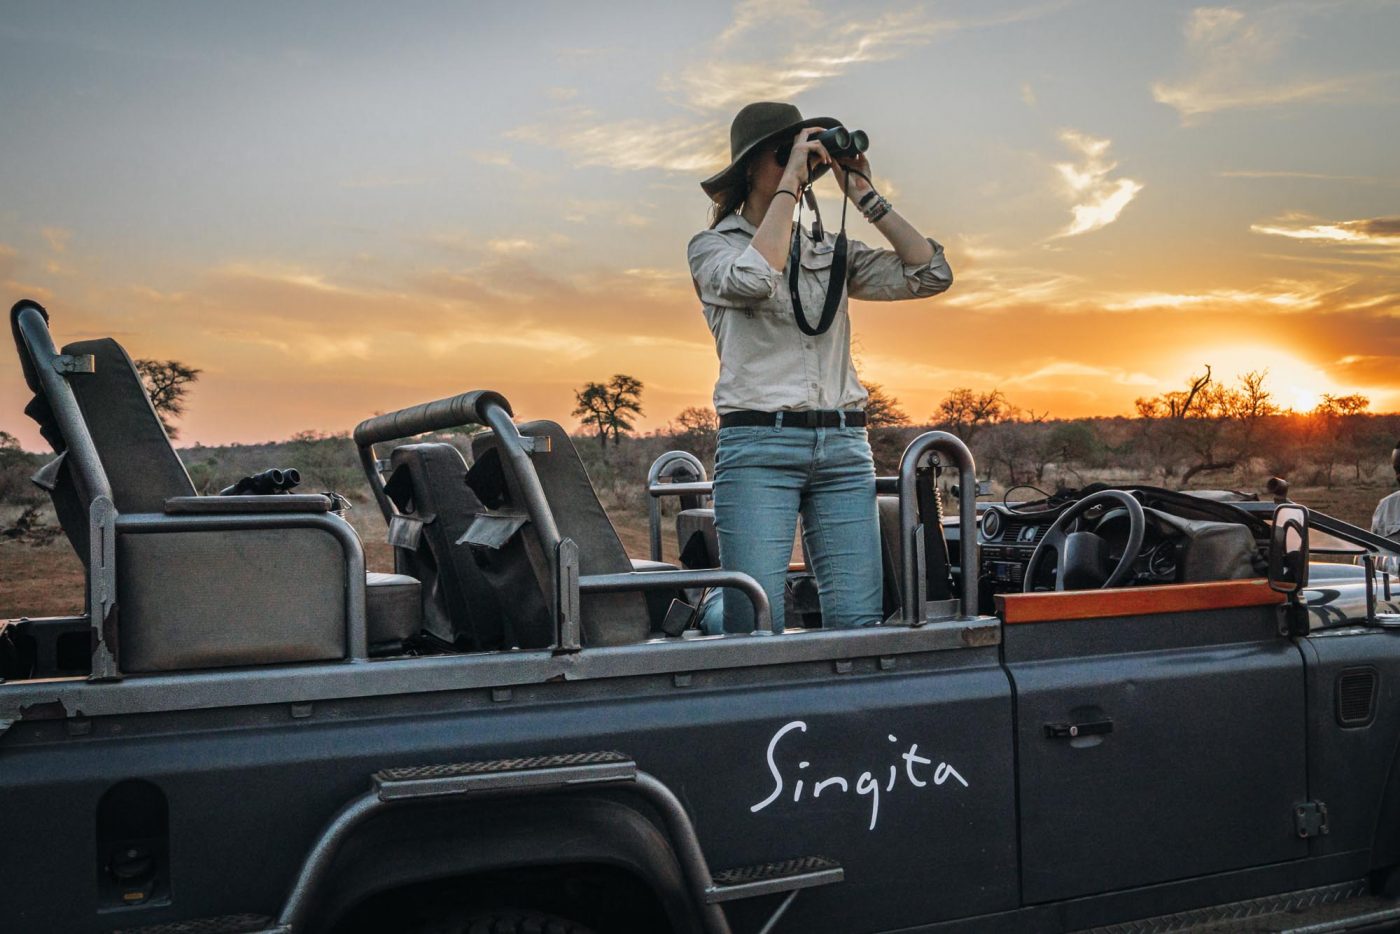 On a safari with Singita in Kruger National Park